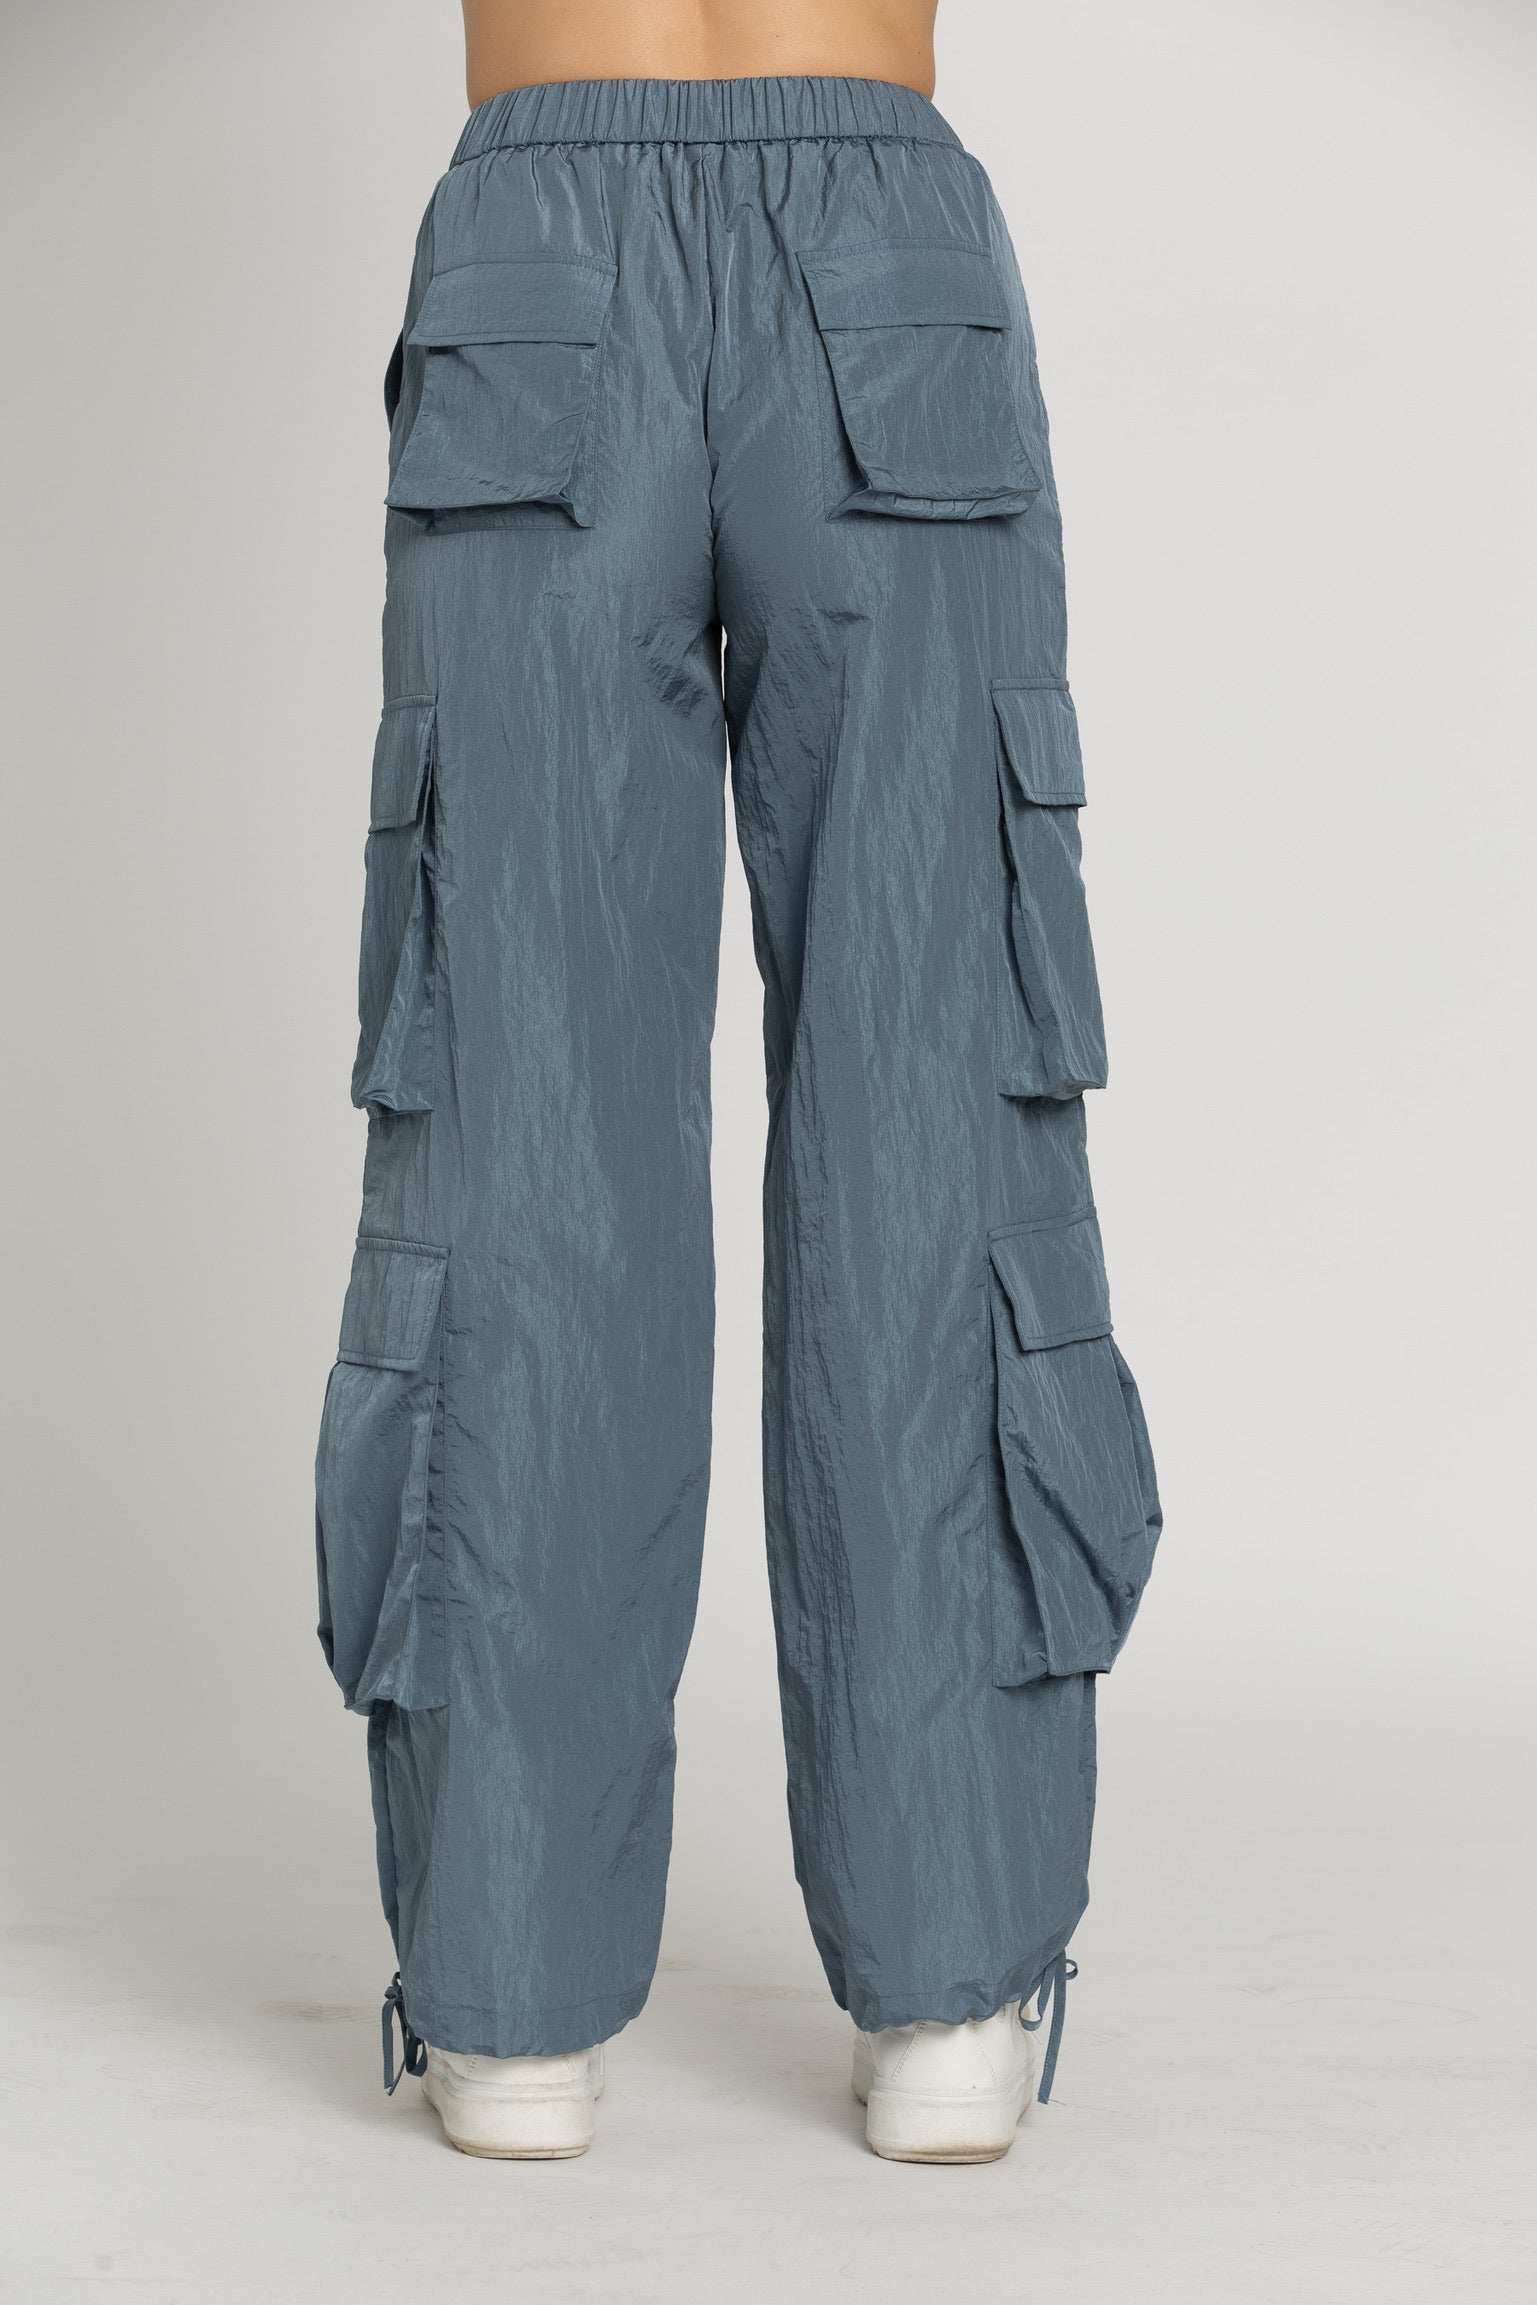 Shiny Blue Parachute Pants